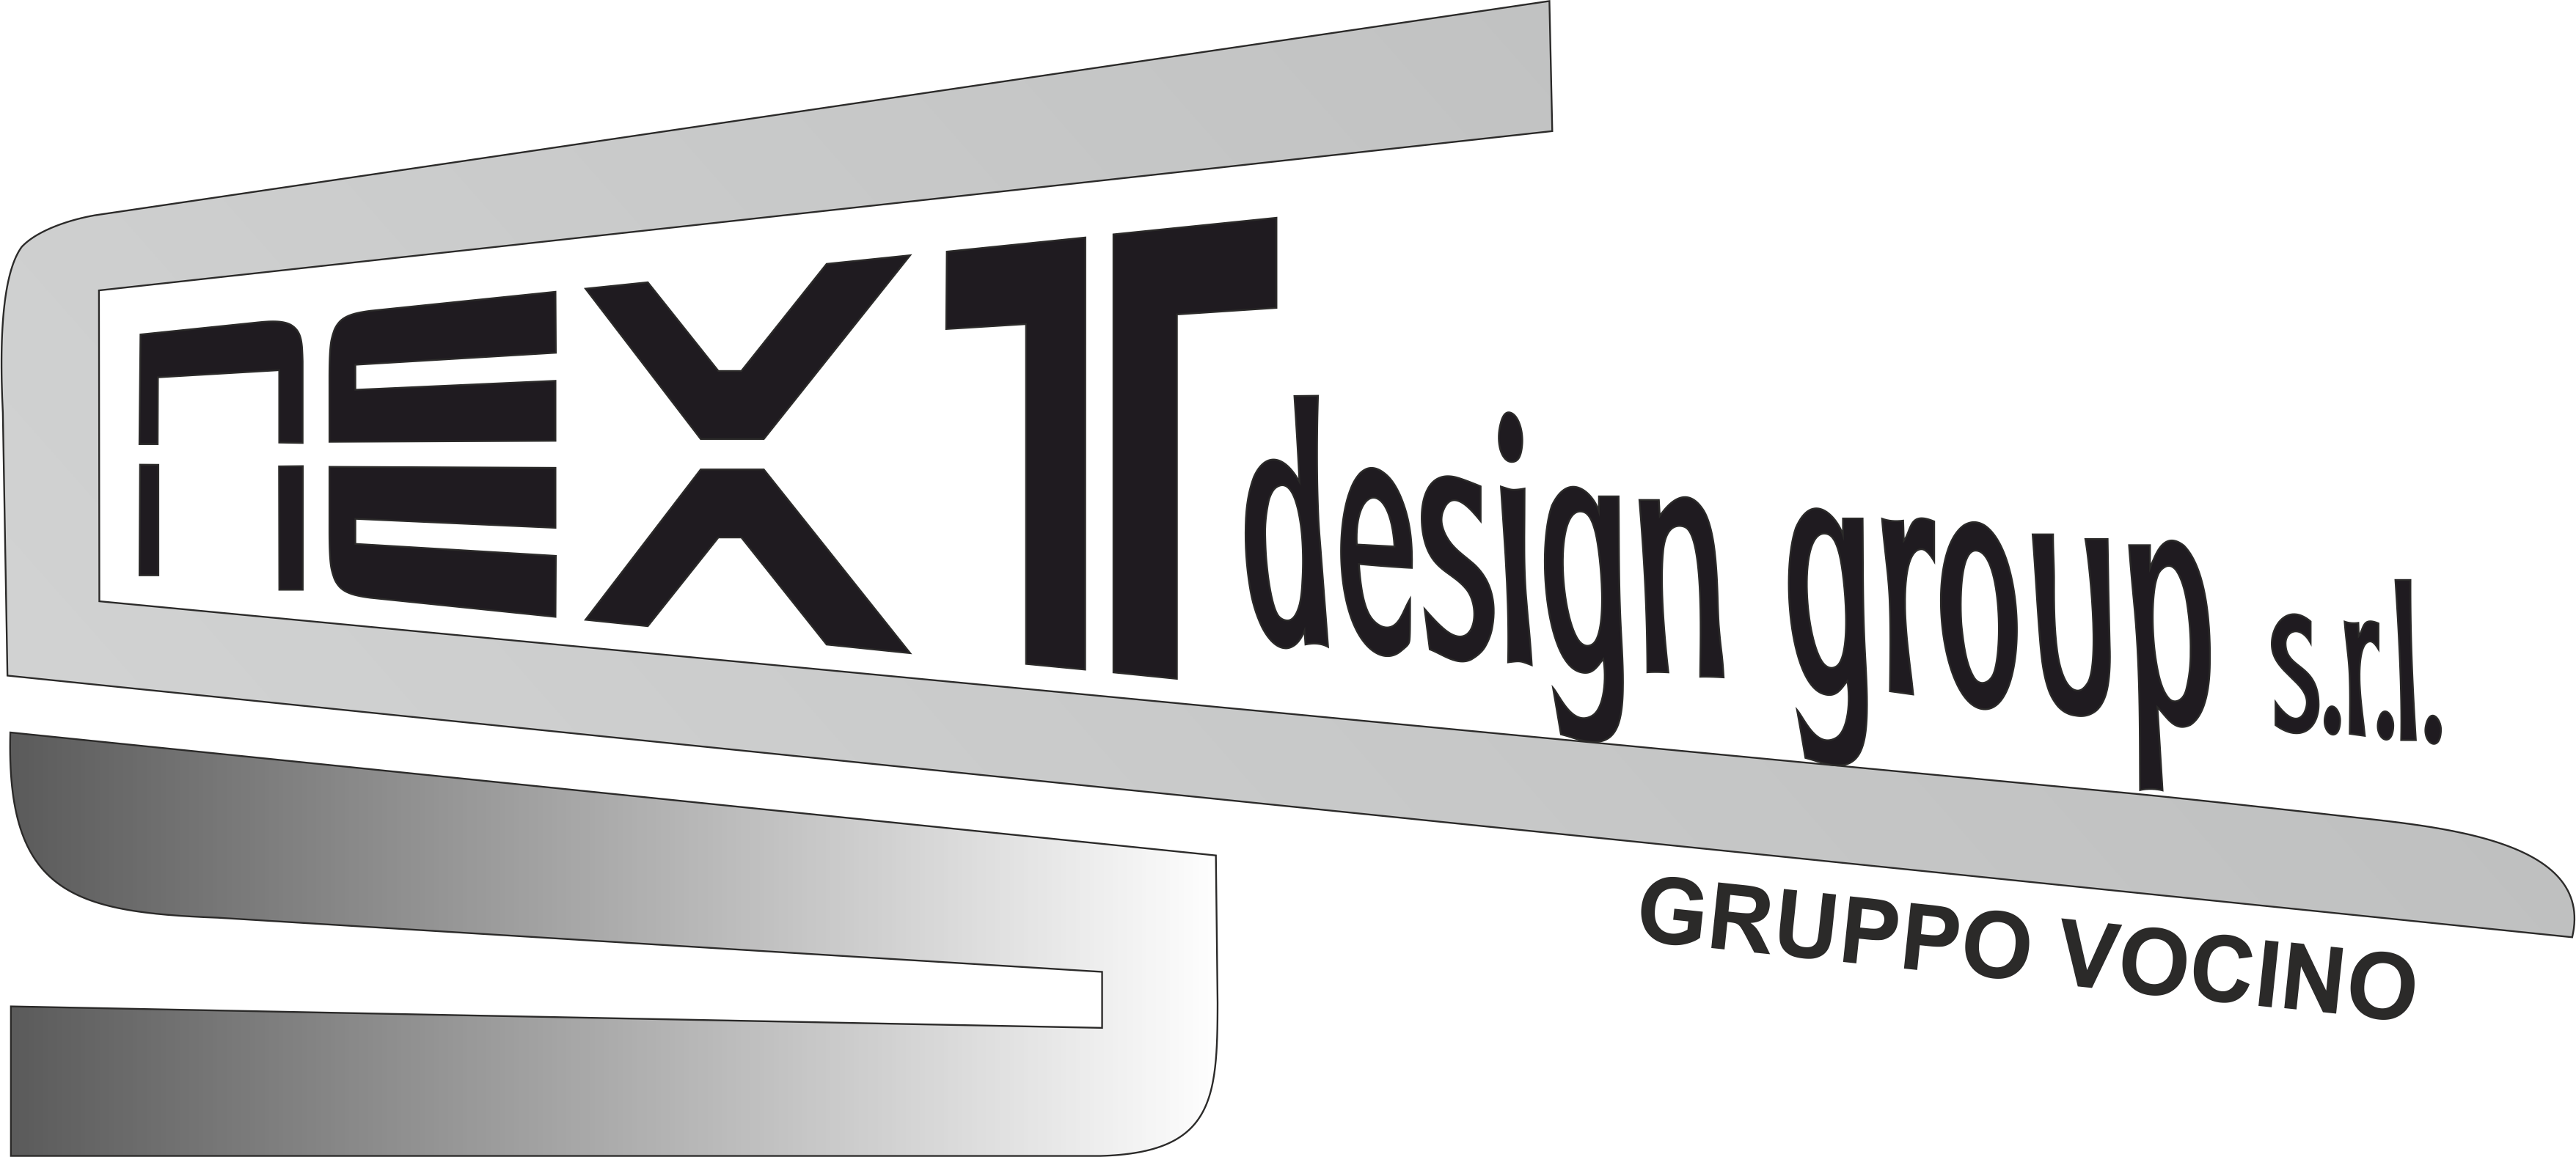 Next Design Group